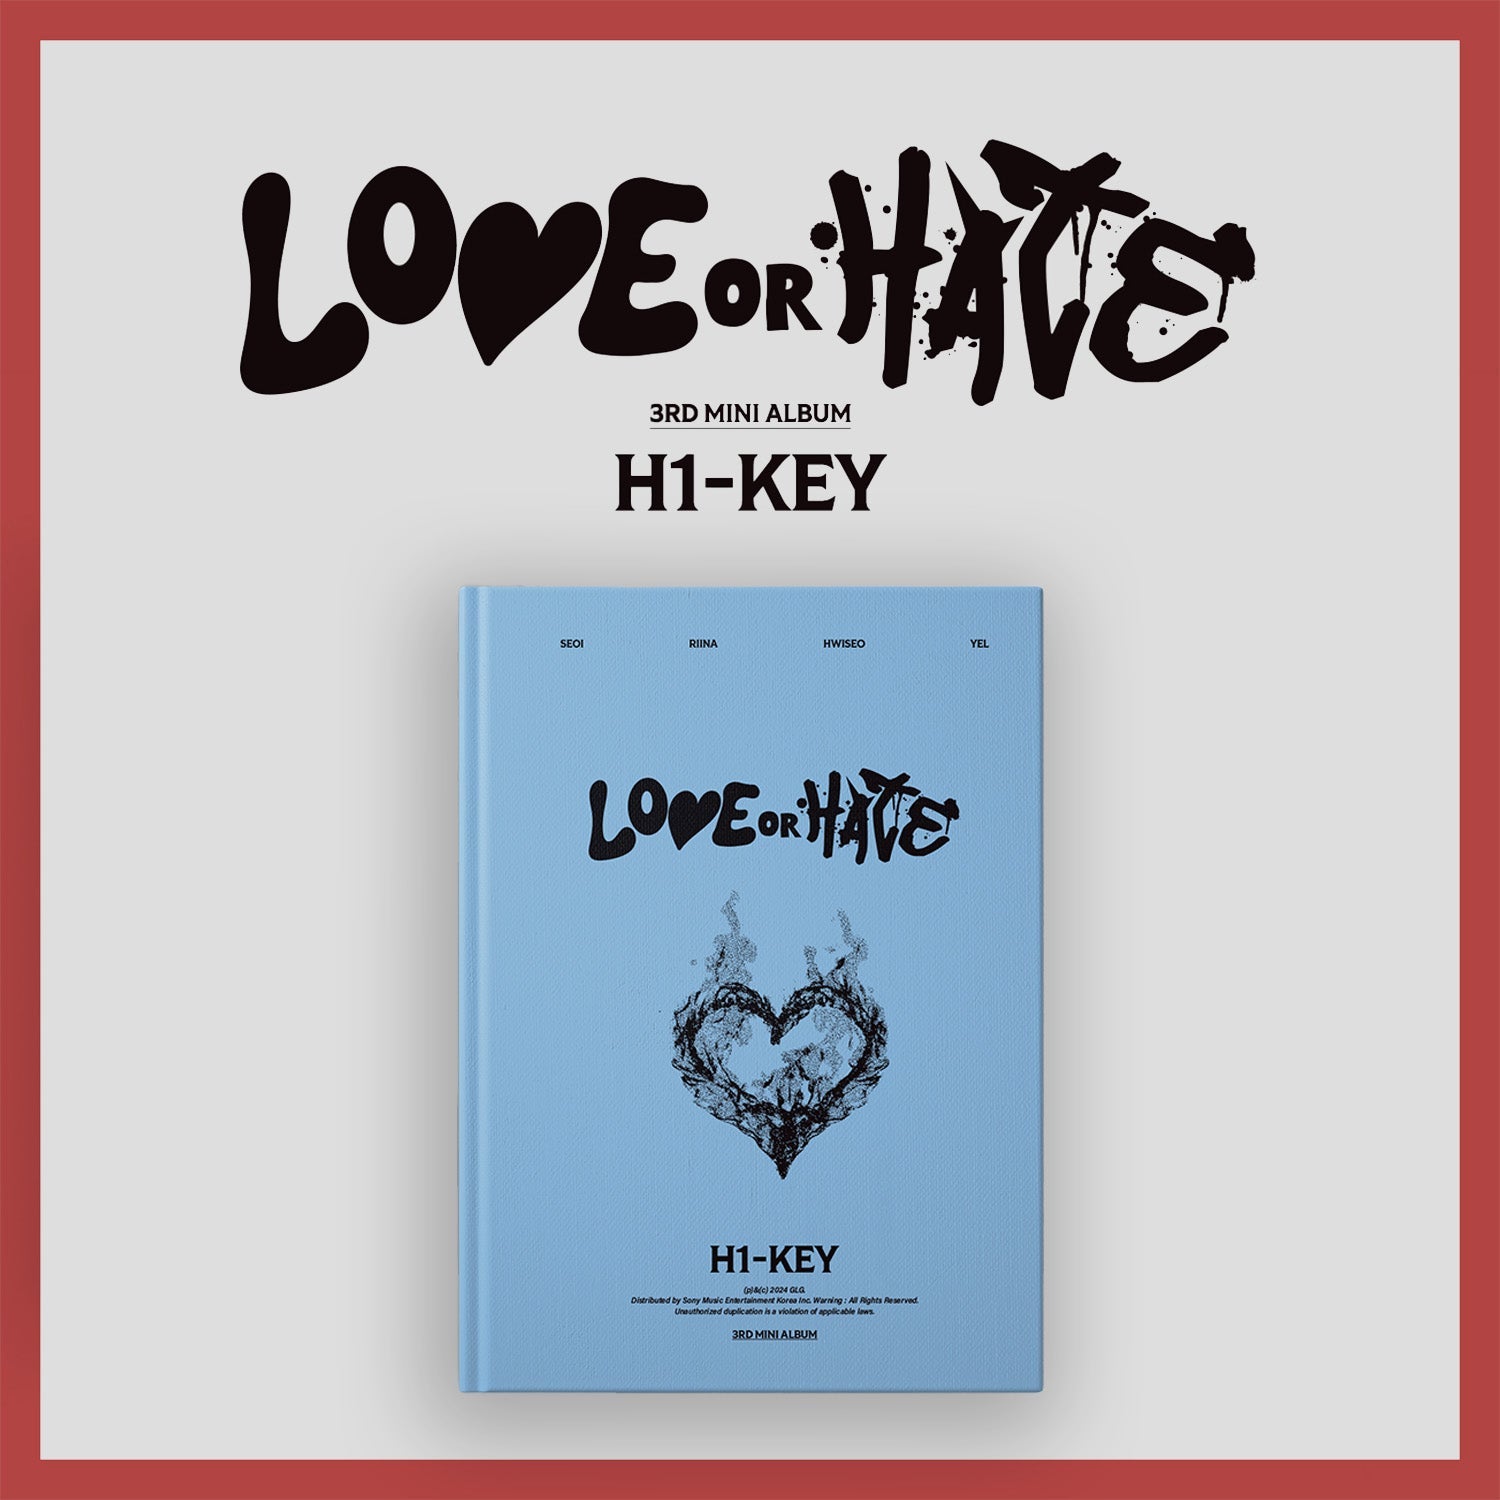 H1-KEY 3RD MINI ALBUM 'LOVE OR HATE' LIE VERSION COVER